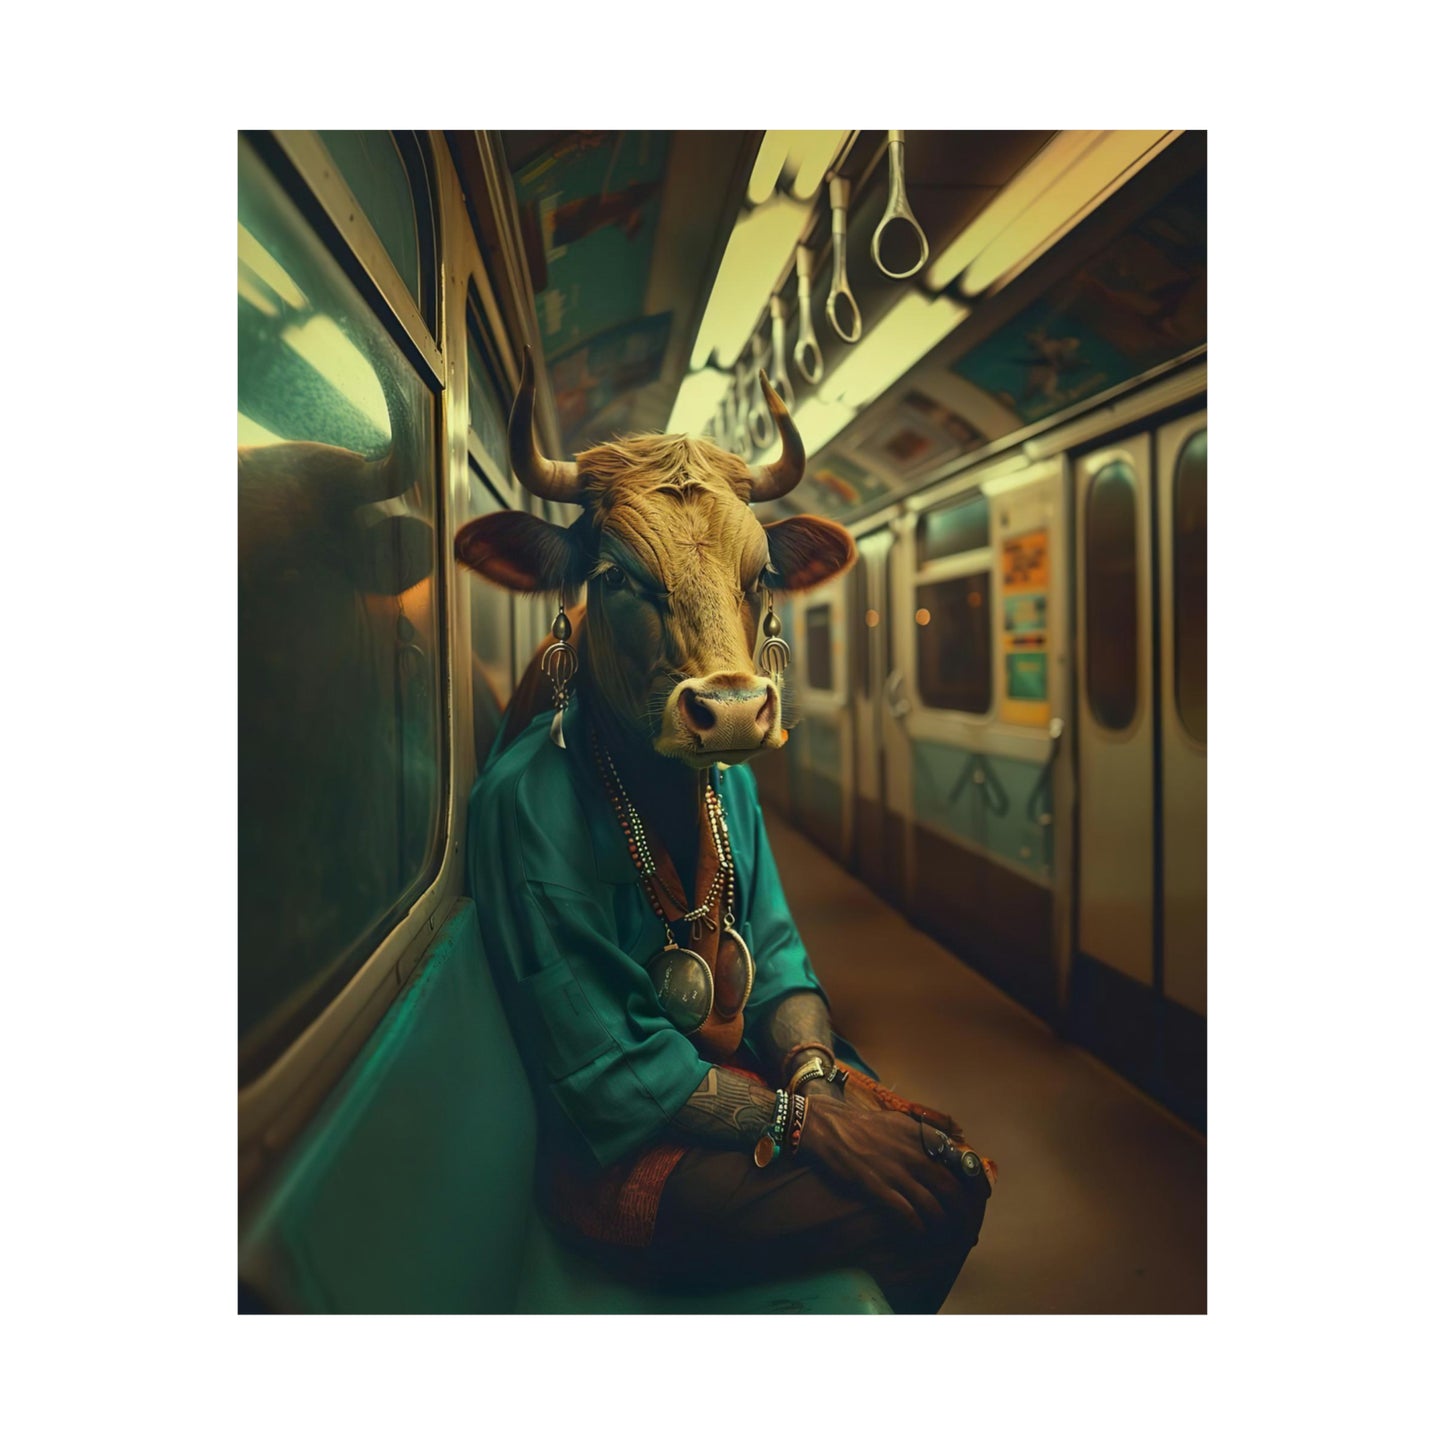 Cow in NY Subway, Cow Wall Art